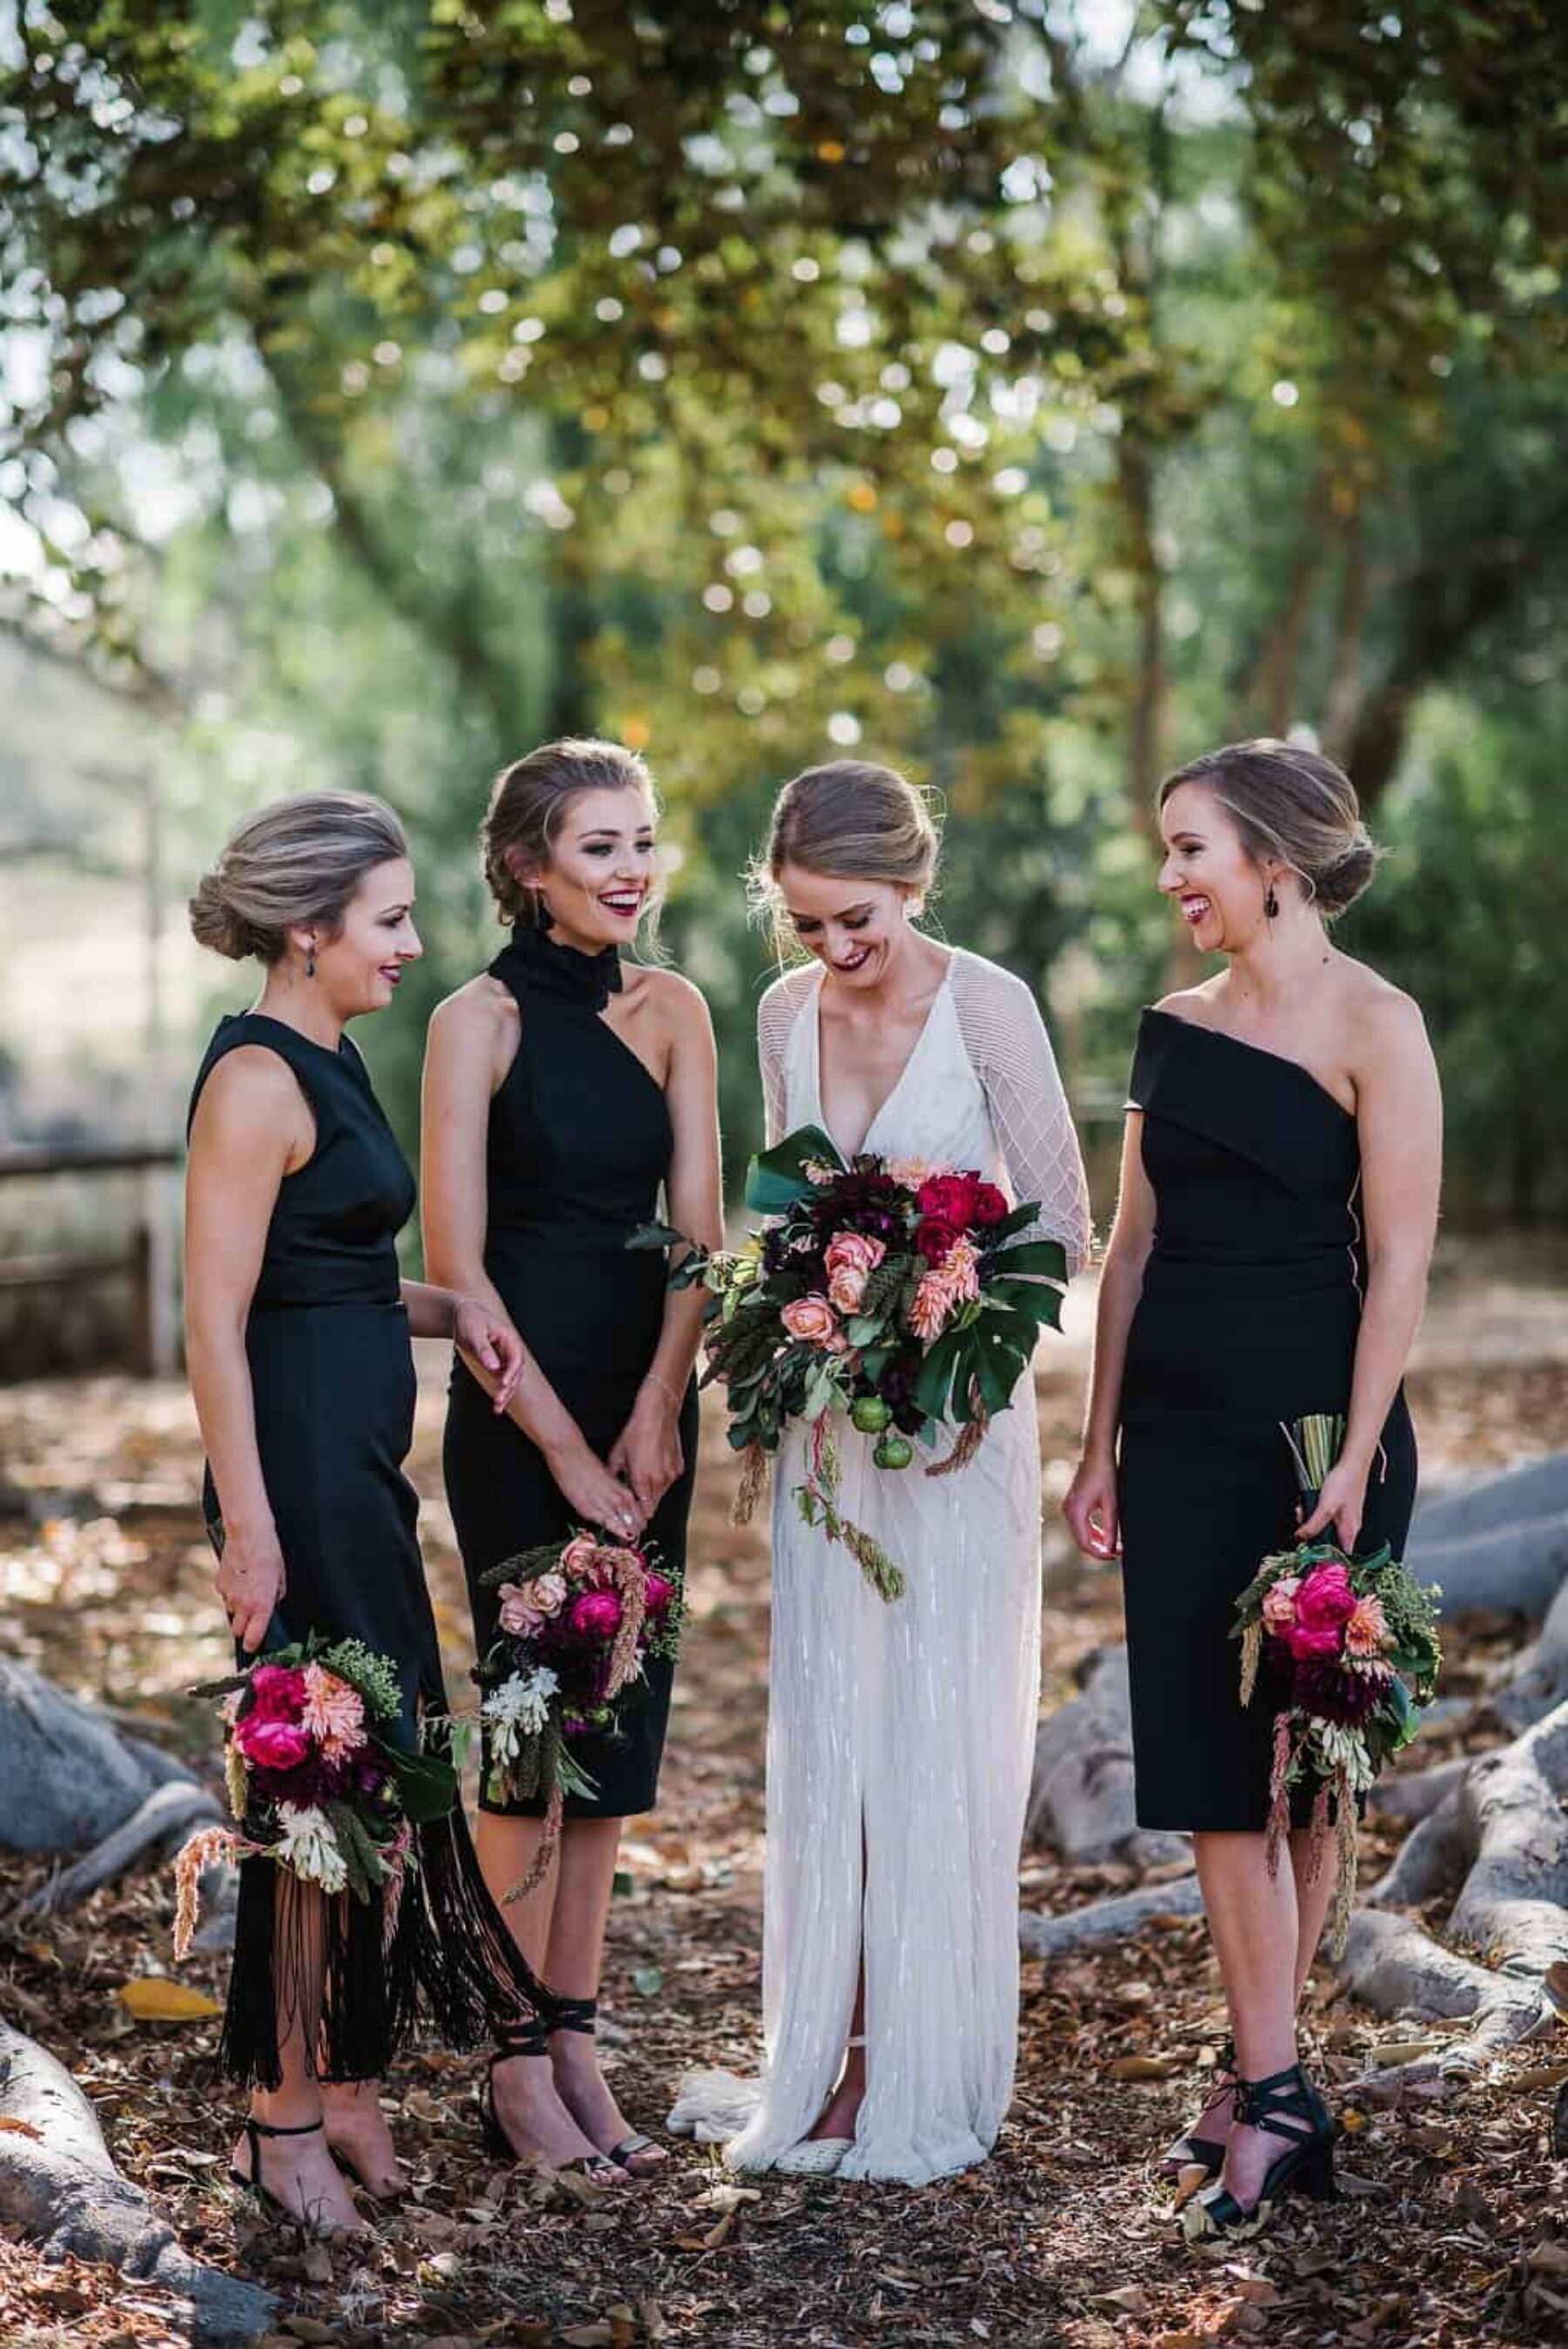 art deco bride and bridesmaids in black cocktail dresses